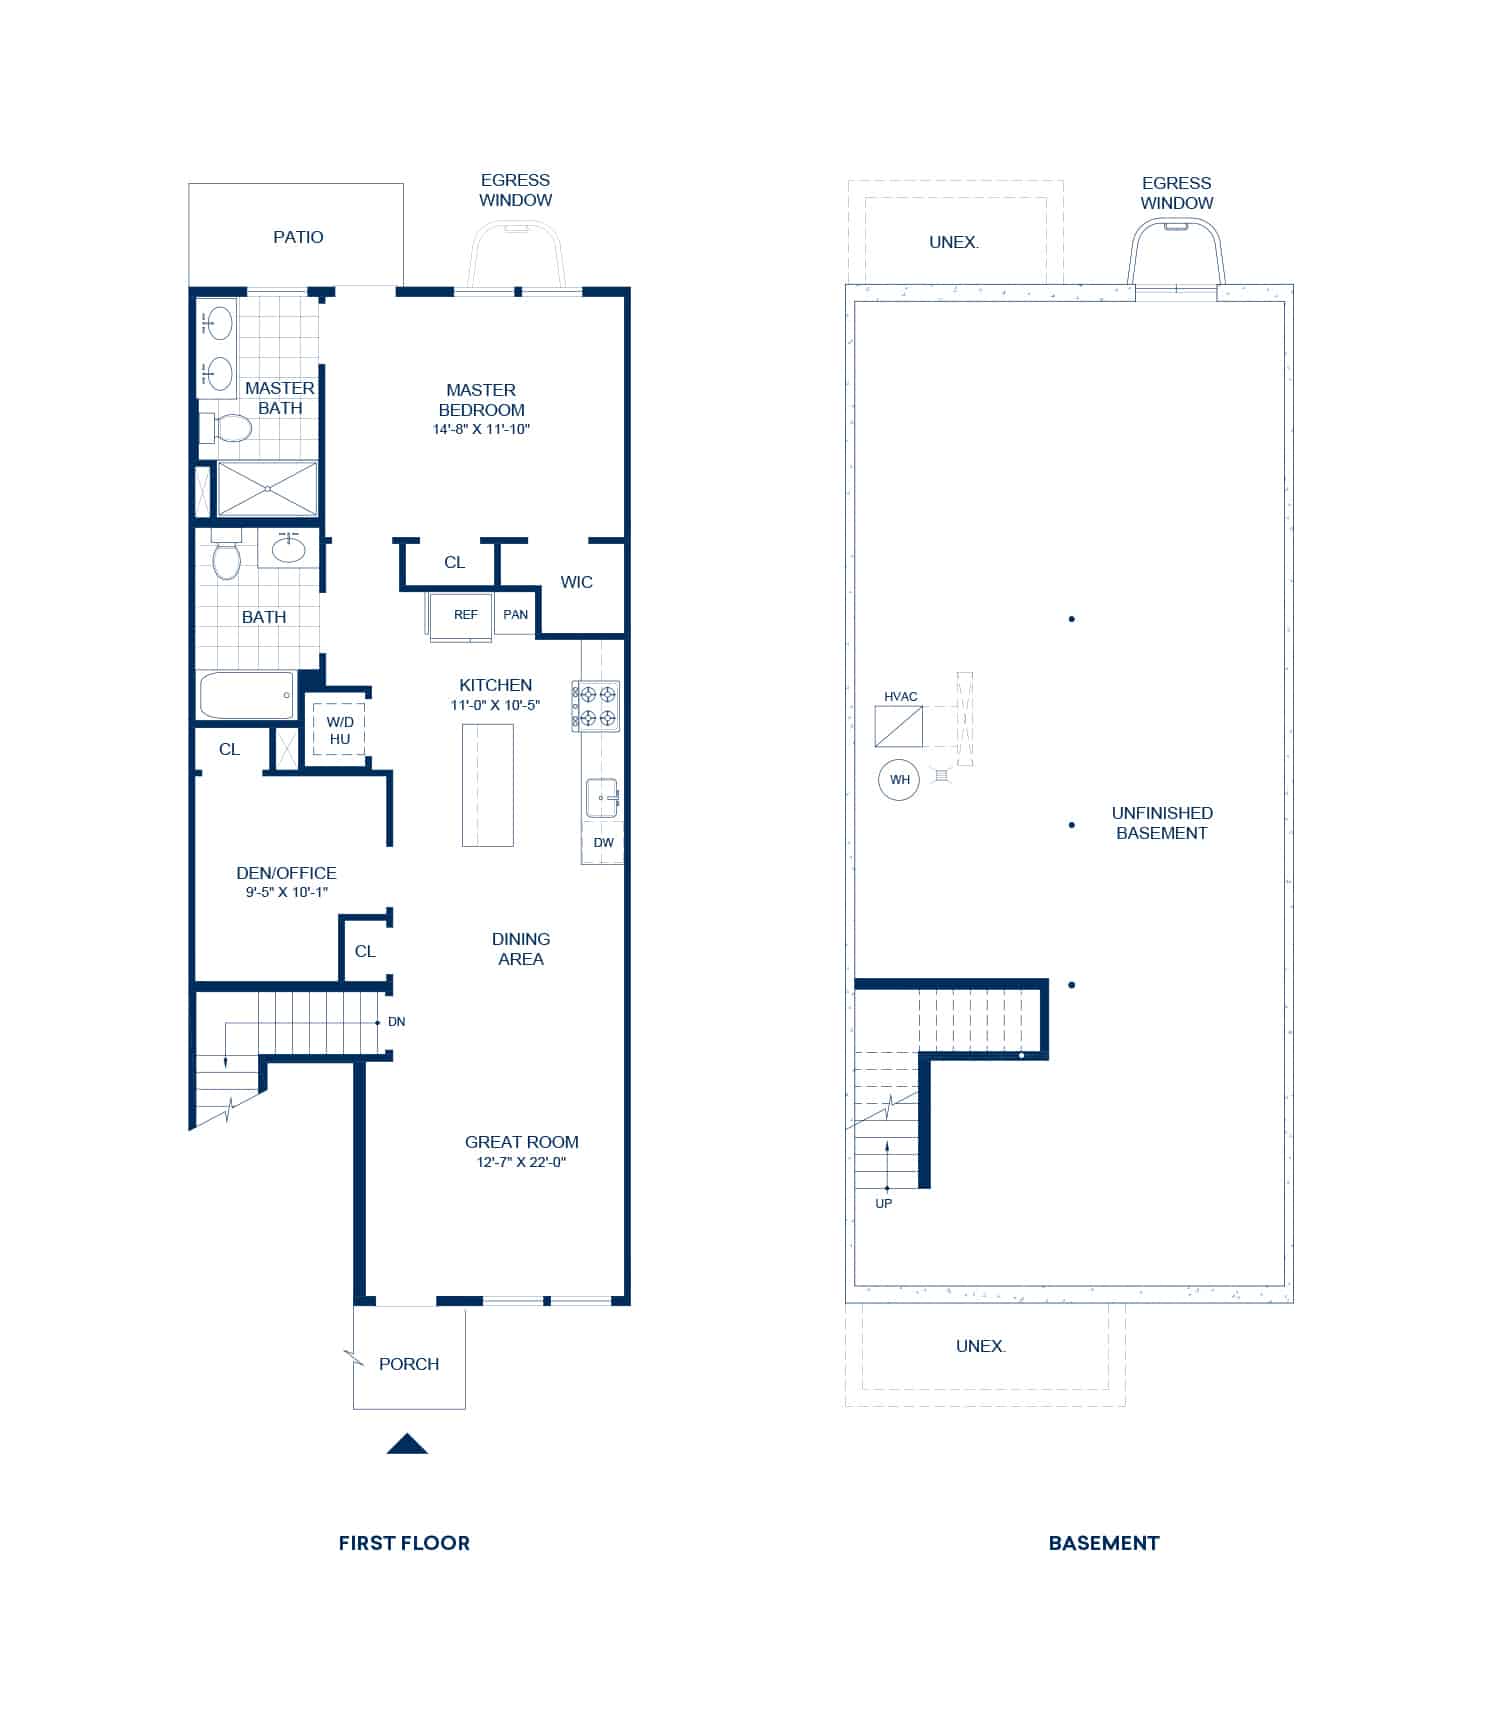 The Churchill C3 Floor Plan